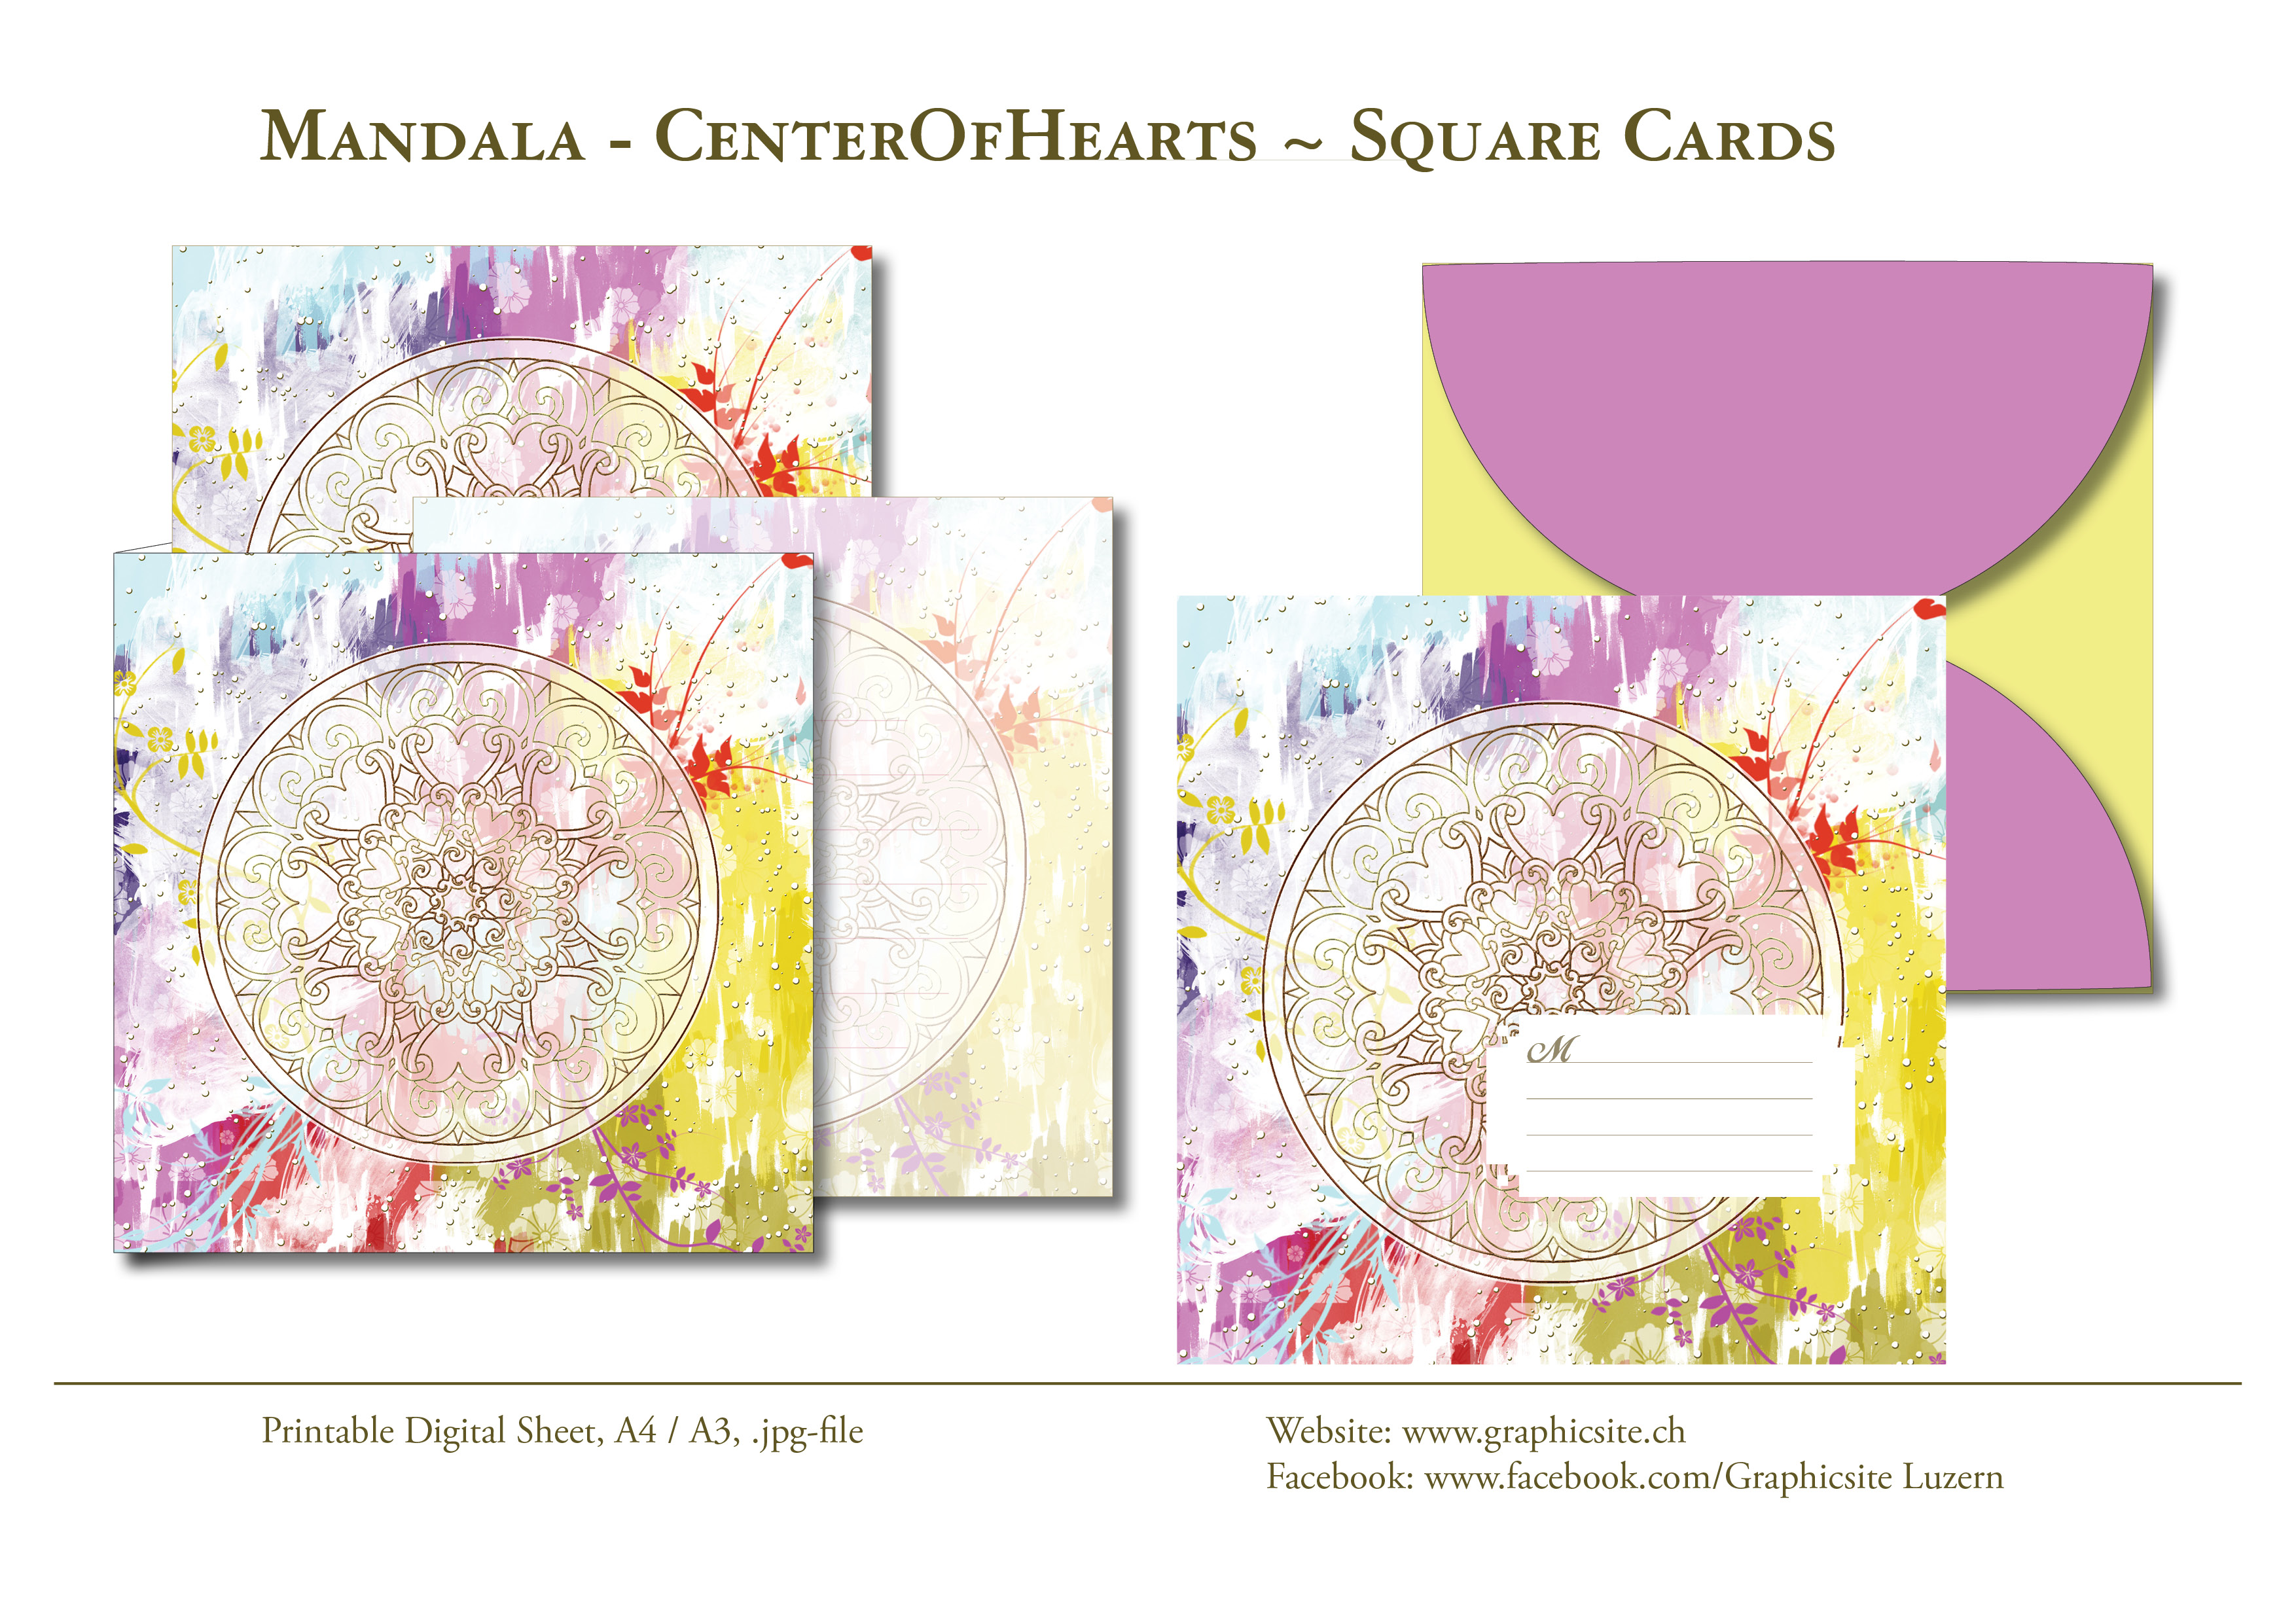 Printable Digital Sheets - Square Cards - MANDALA CenterOfHearts - Greeting Cards, Yoga, Meditation, Watercolor, digital painting, Graphic Design, Luzern